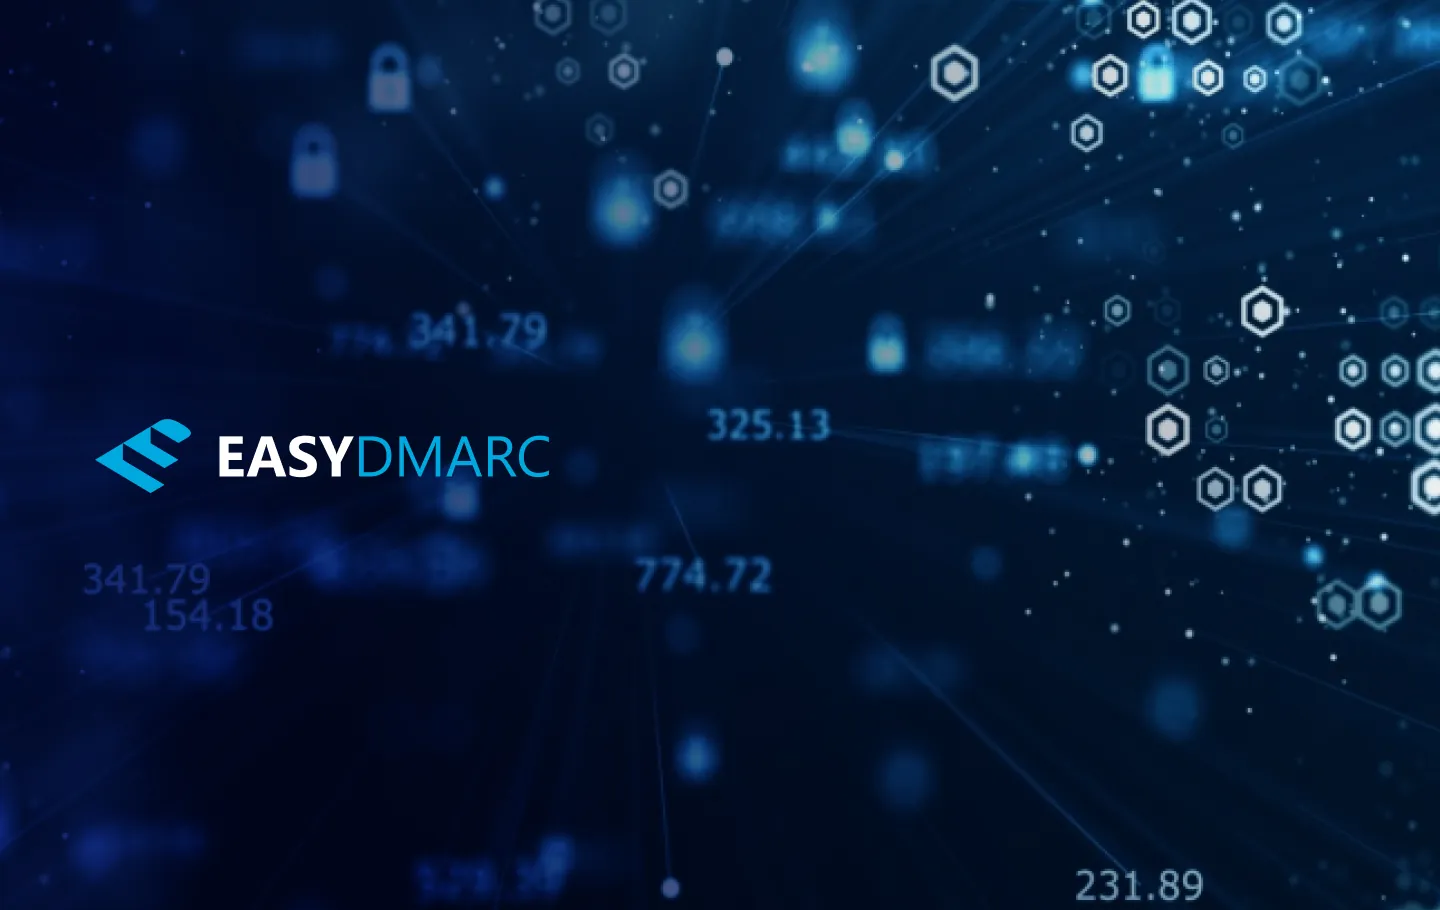 EasyDMARC logo on a dark blue background